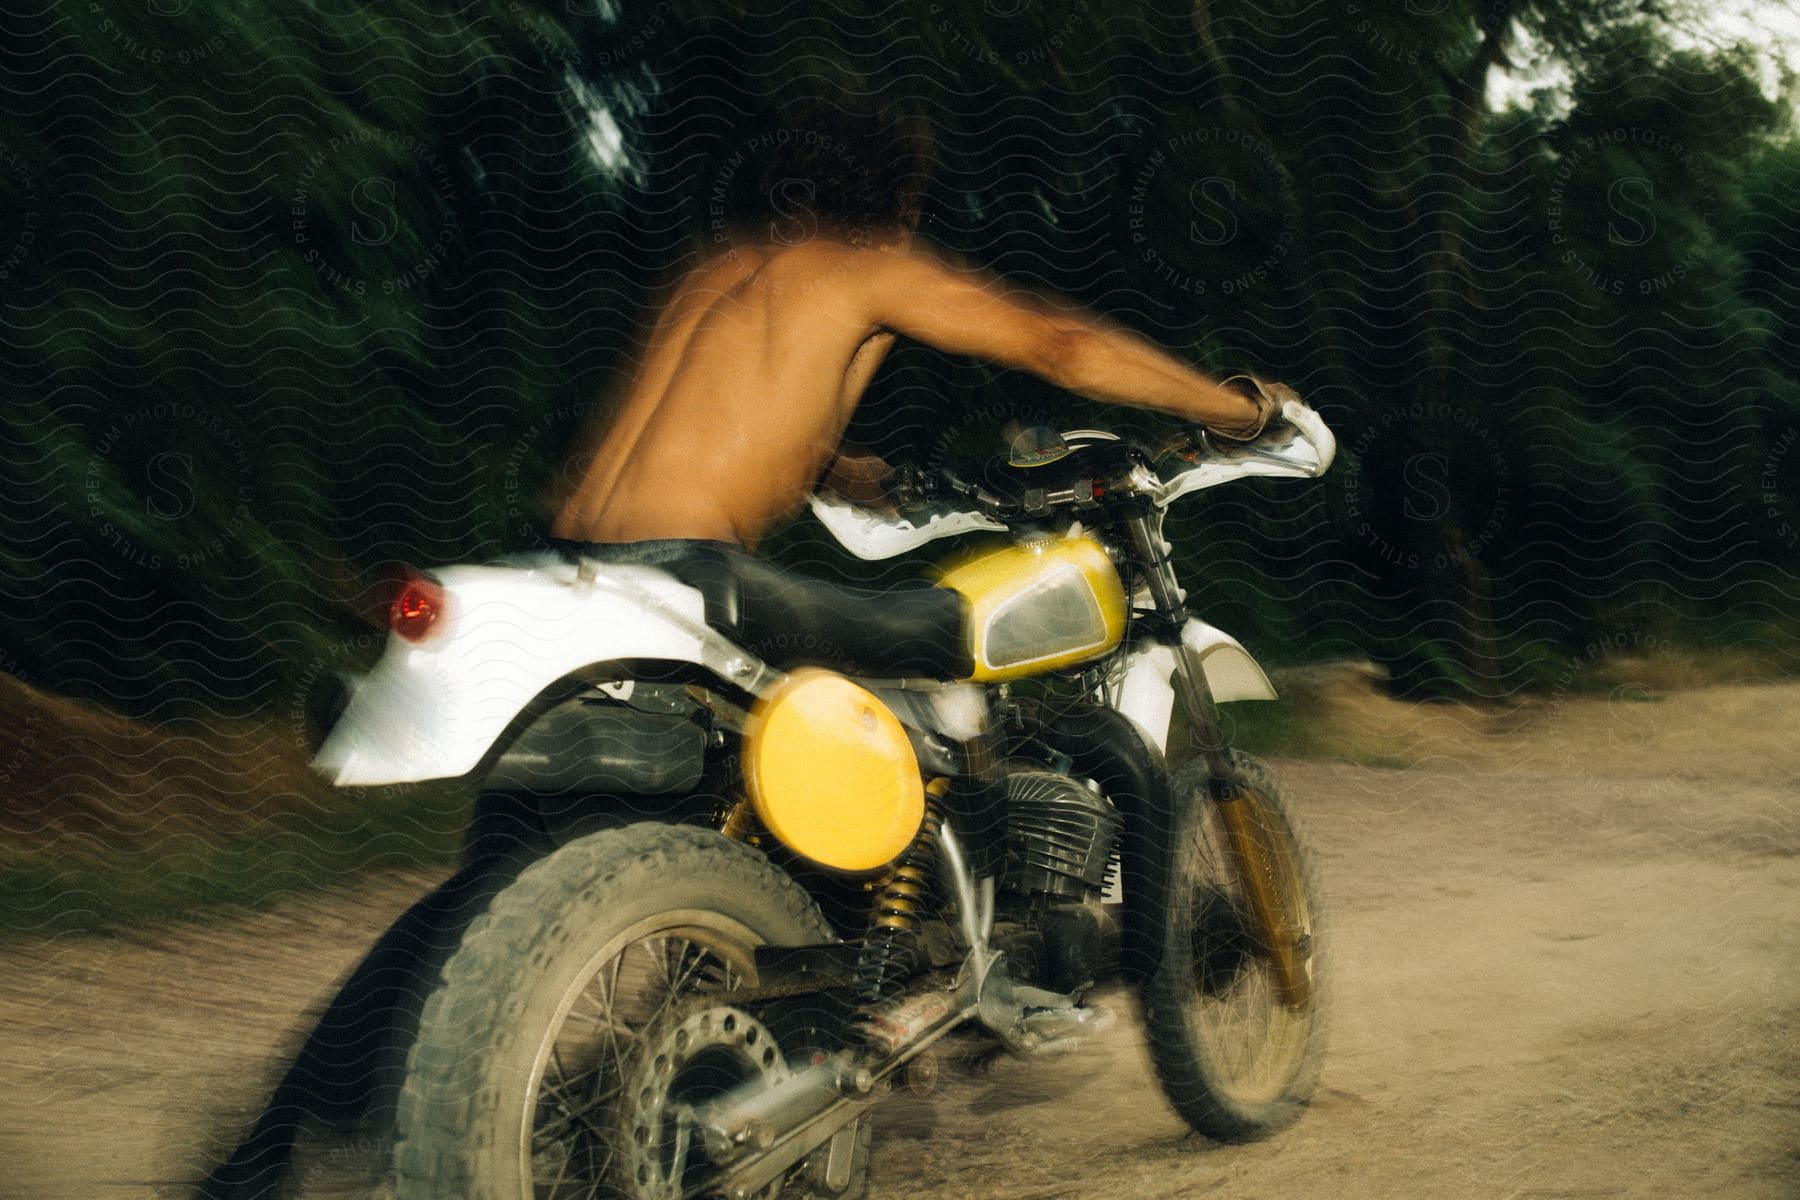 A shirtless man pushes a motorcycle along a dirt road.